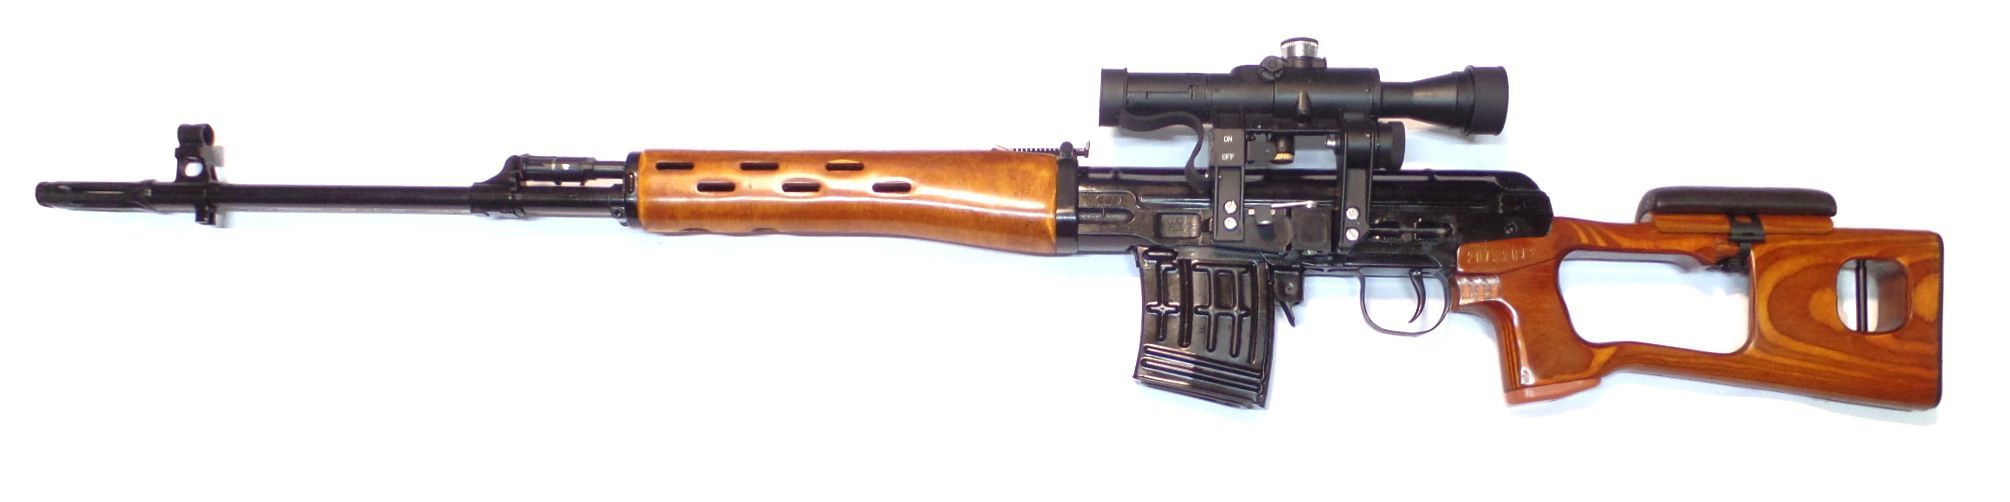 DRAGUNOV SVD calibre 7.62x54R REPETITION MANUELLE